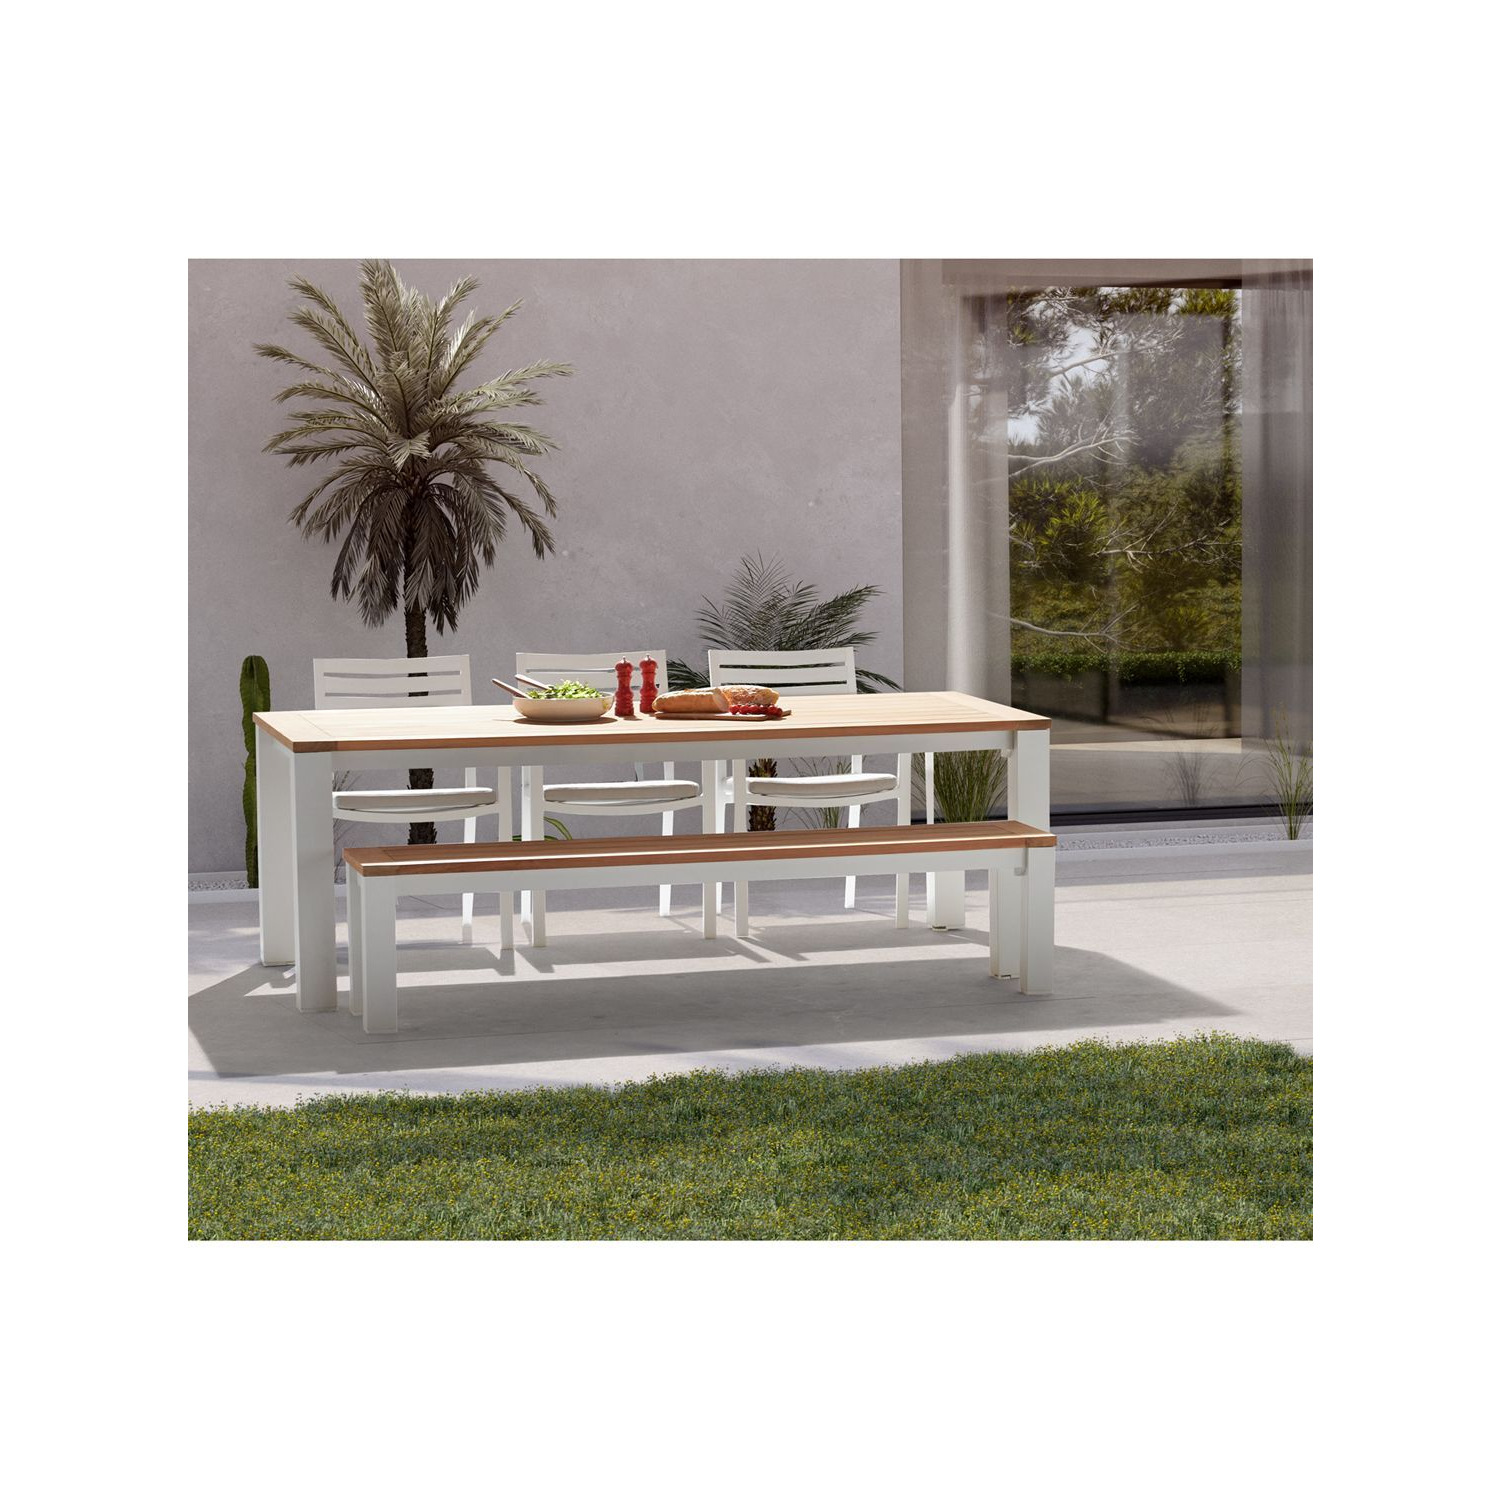 KETTLER Elba Garden Dining Table, FSC-Certified (Teak Wood), 220cm - image 1